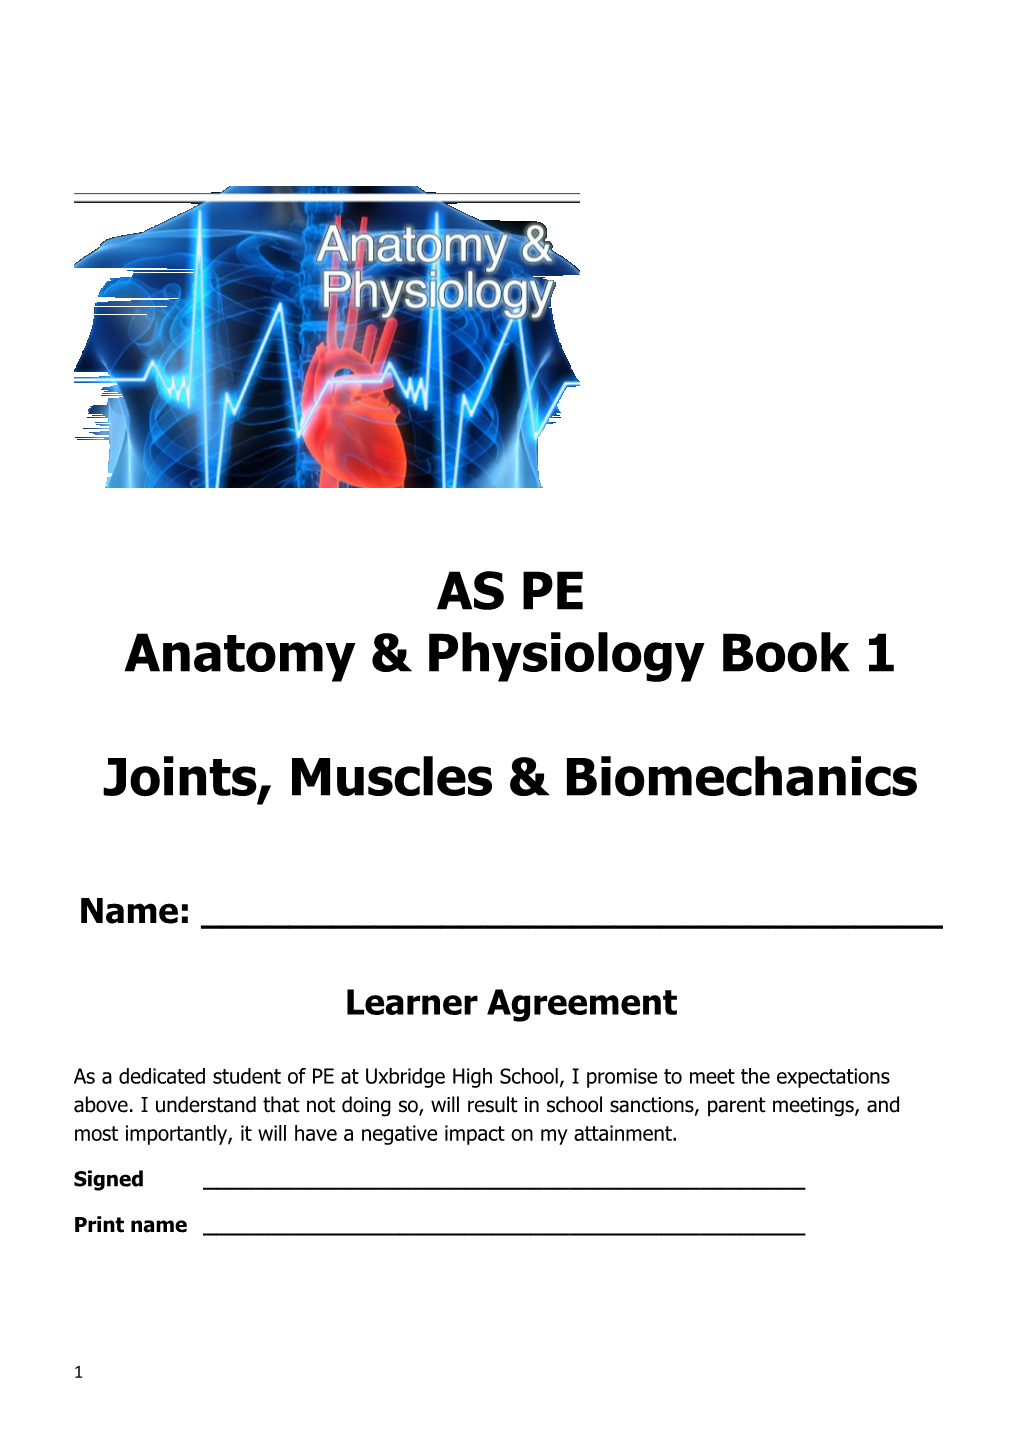 Anatomy & Physiology Book 1